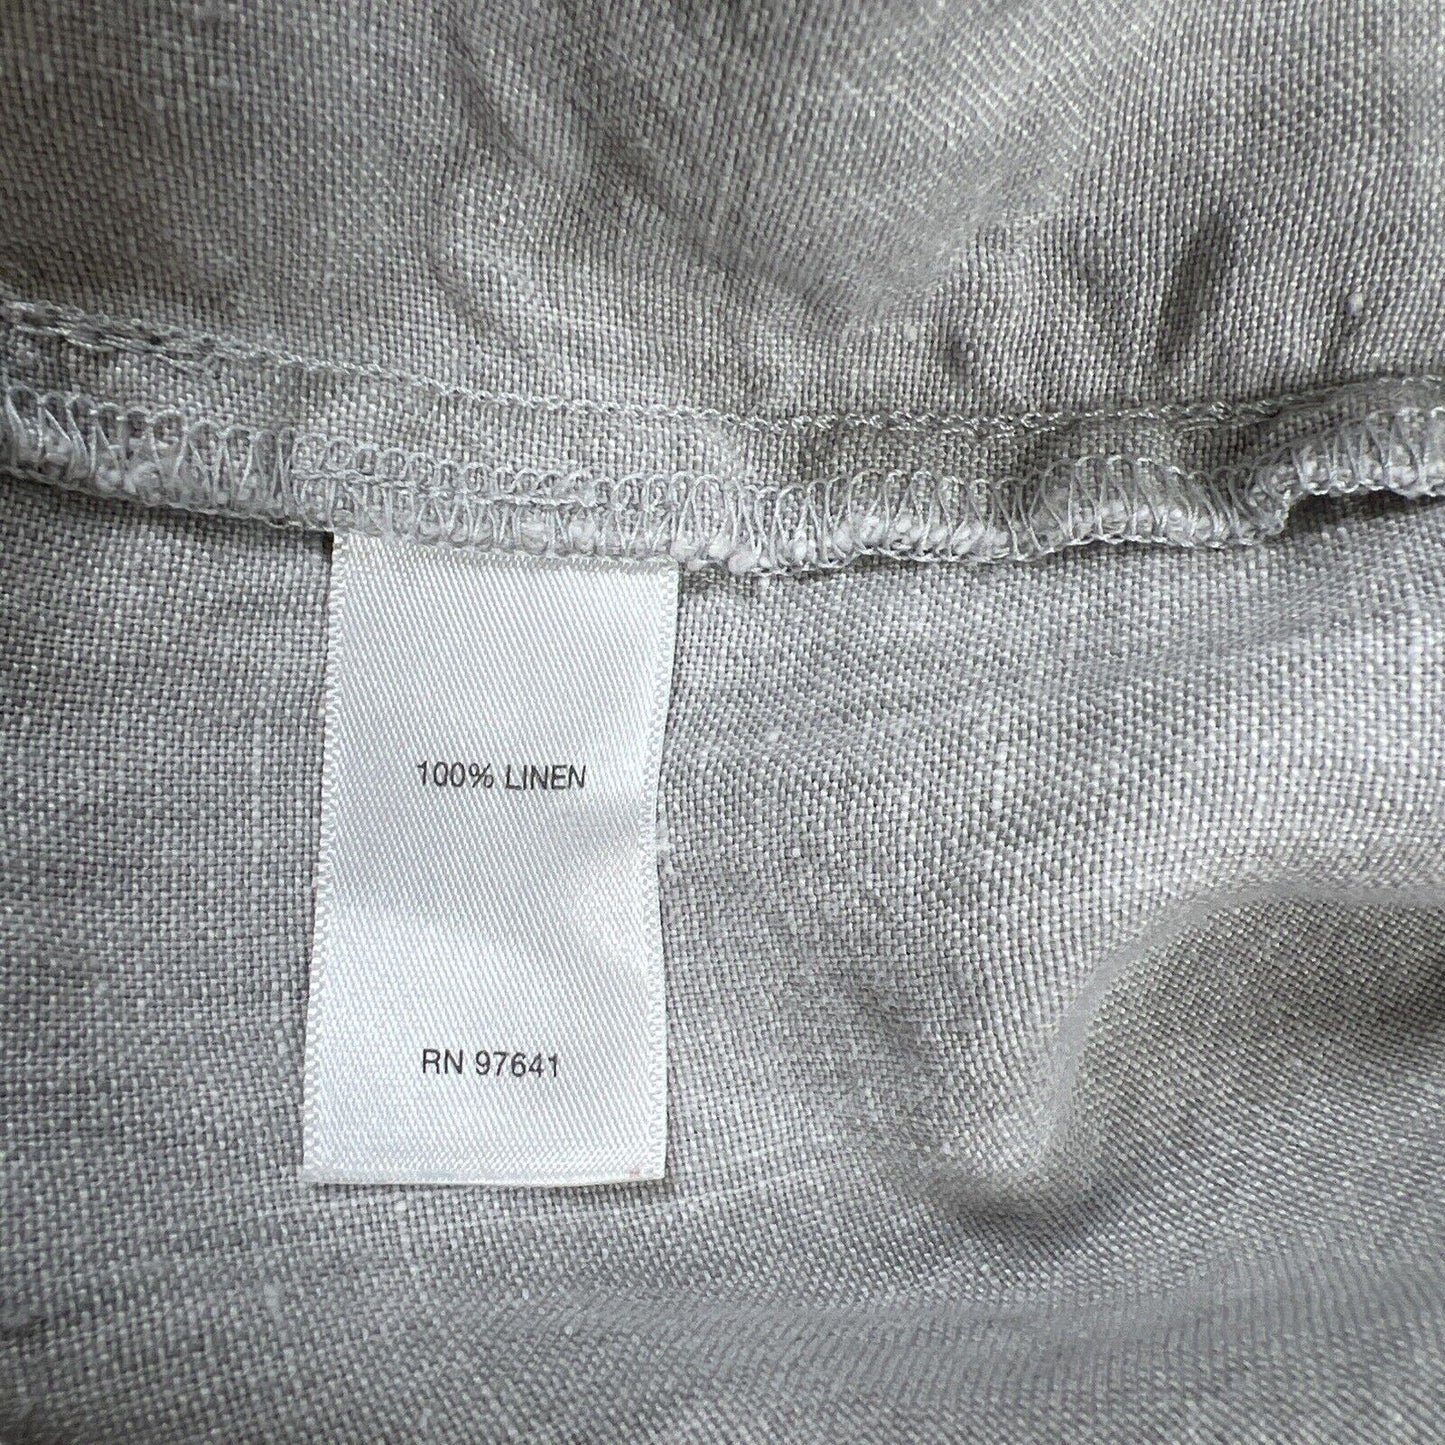 J.Jill Women's Gray Love Linen Casual Cropped Pants - XL Petite